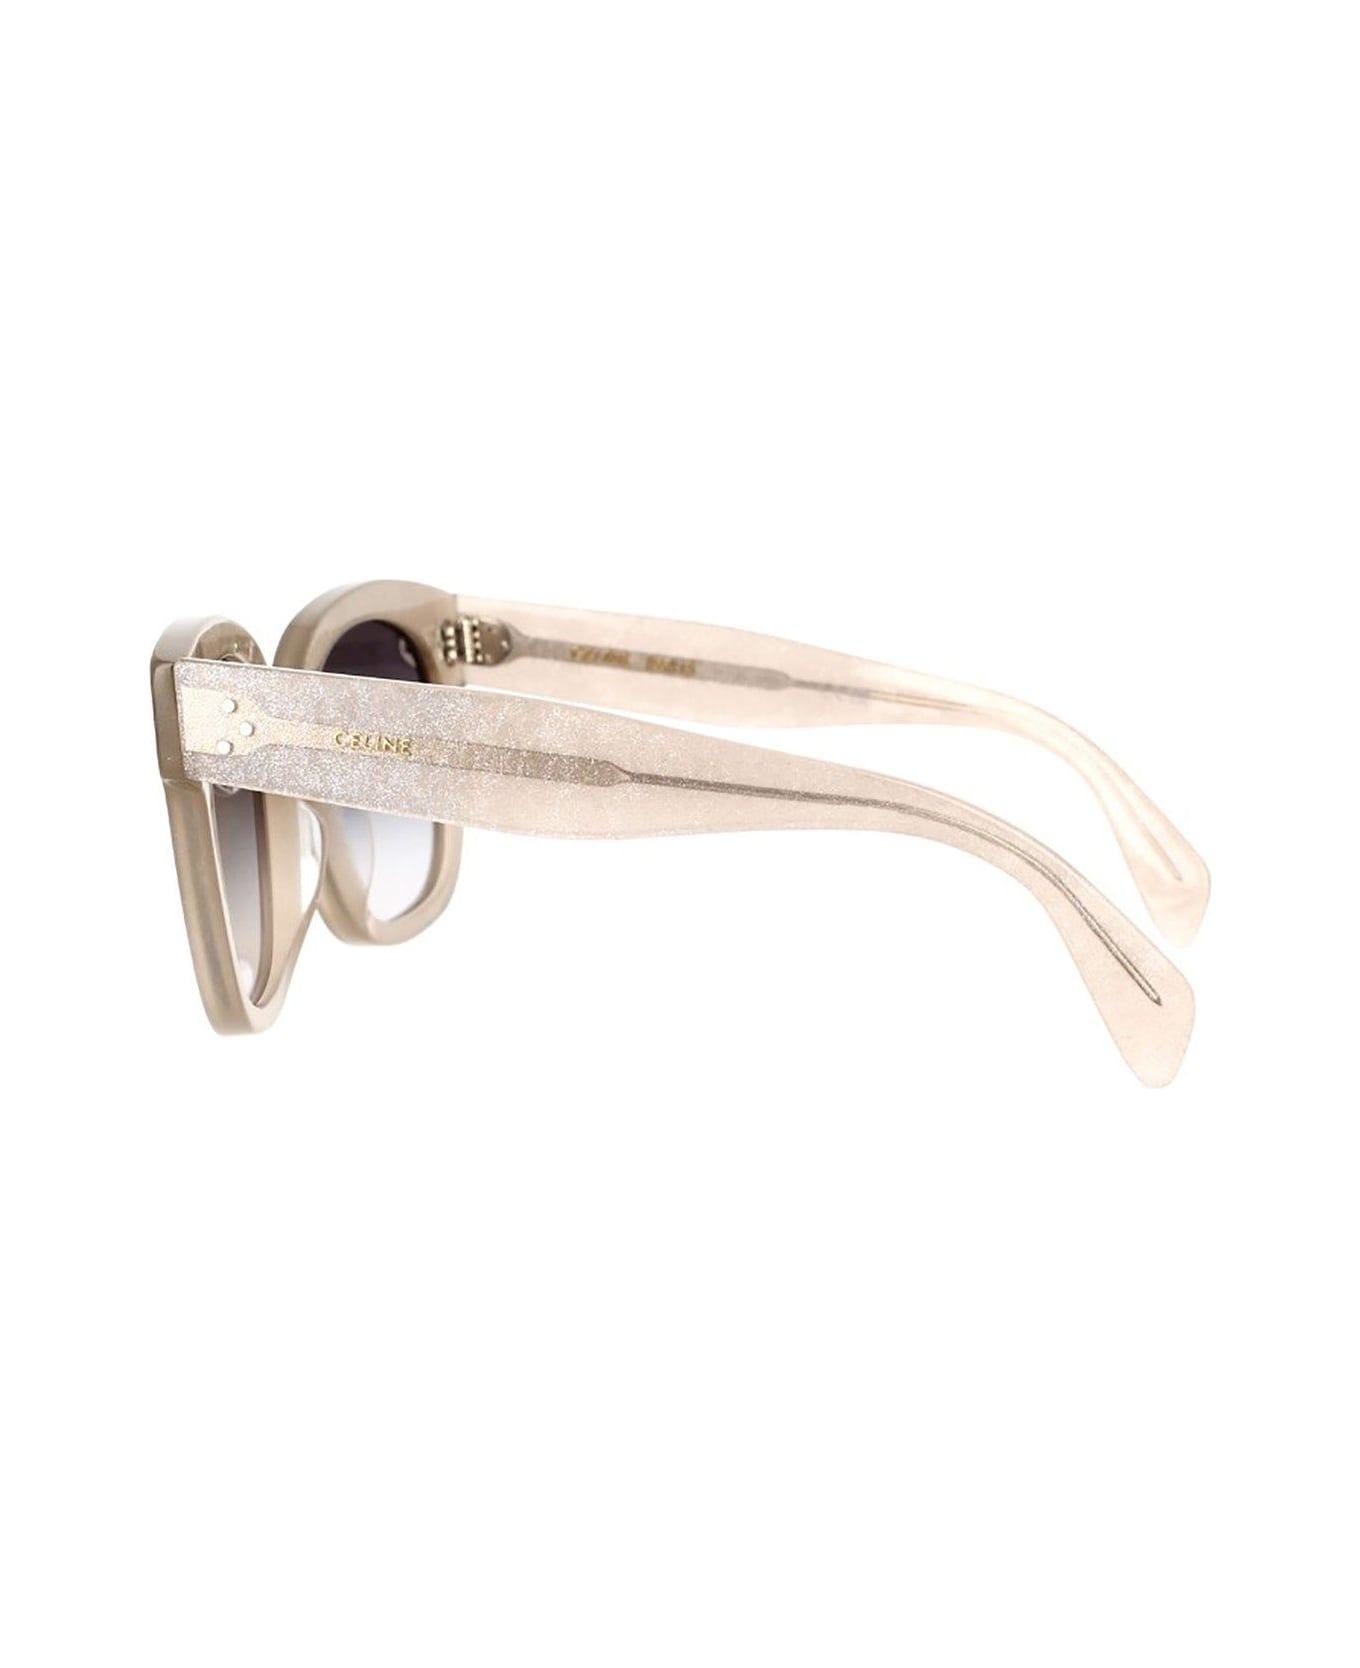 Celine Square Frame Sunglasses - 20b サングラス